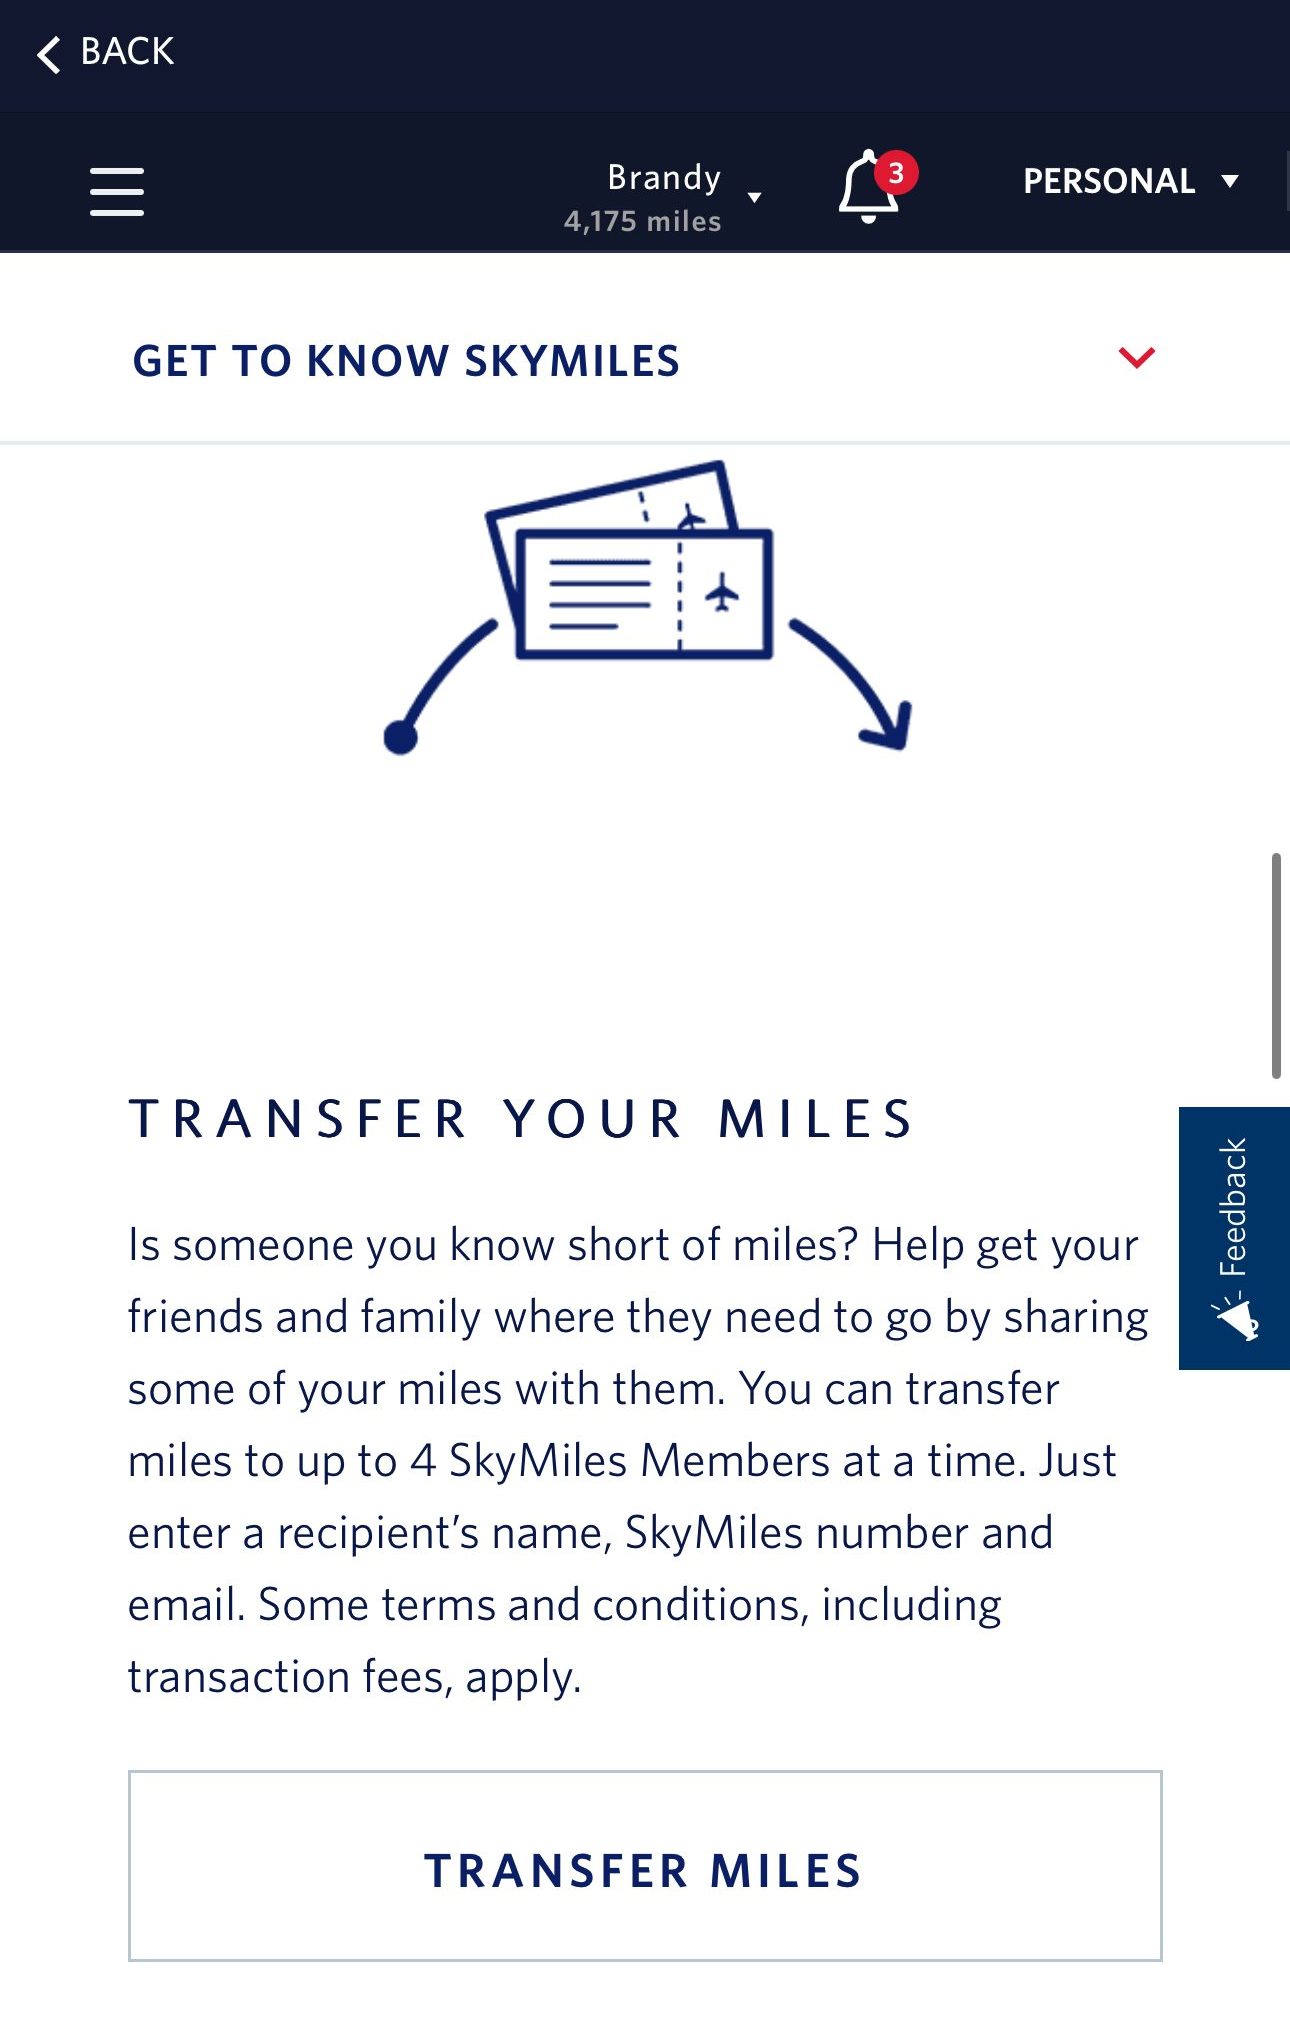 Delta SkyMiles Program - Transfer miles